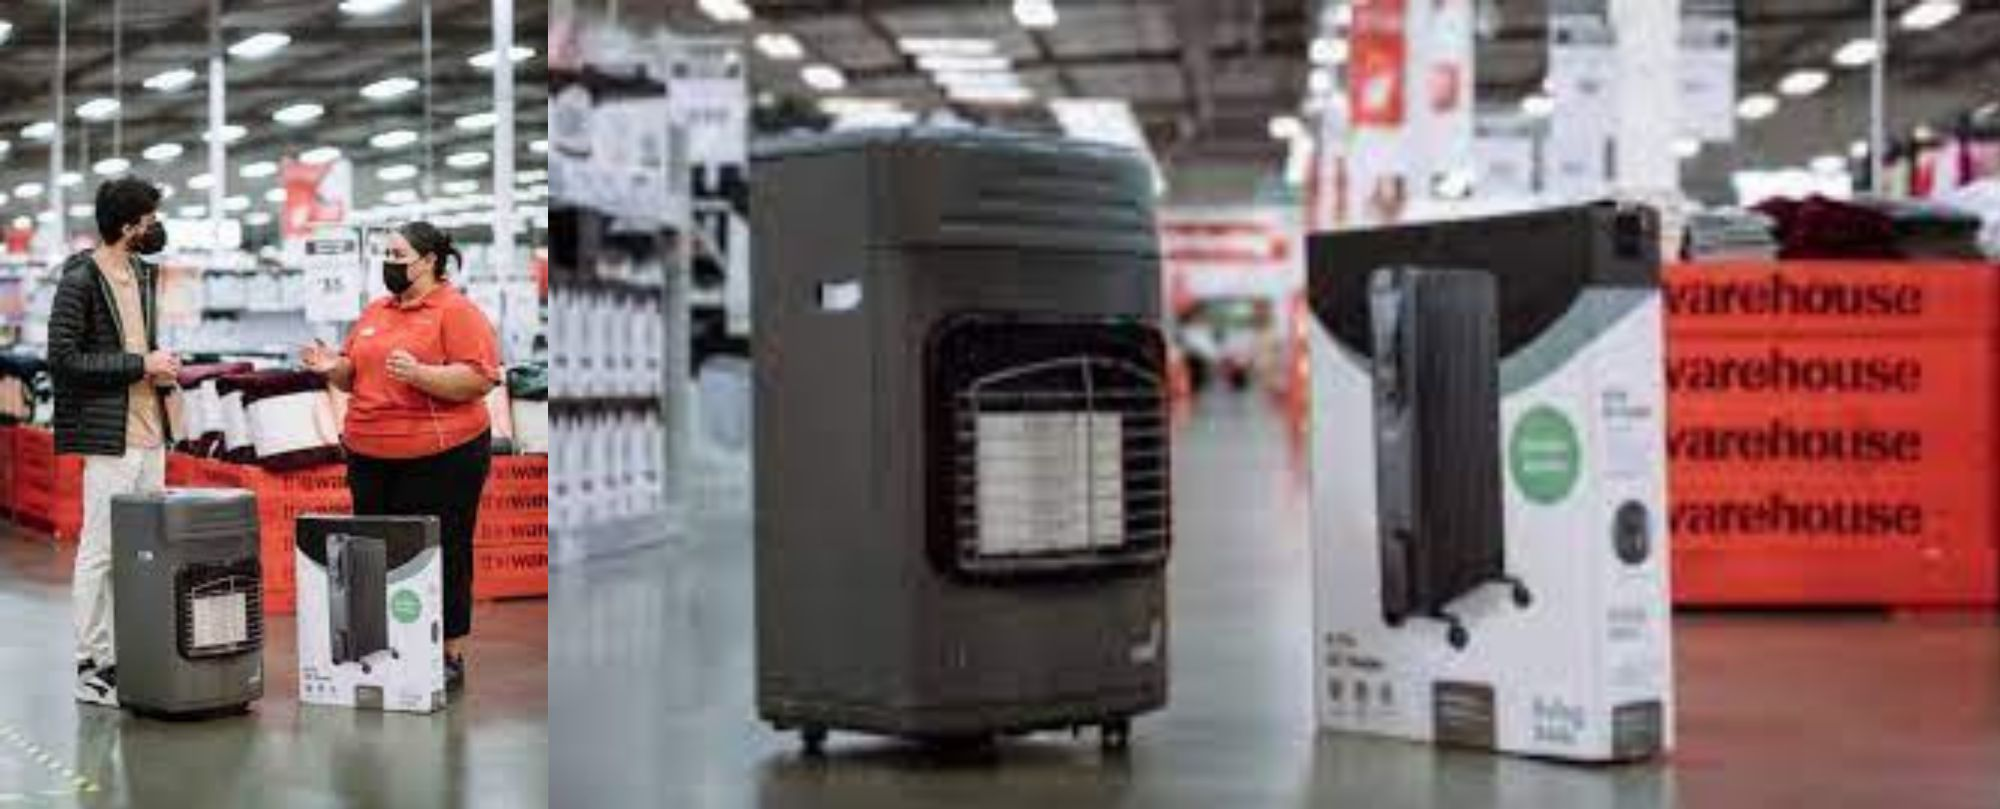 Healthy Homes gas heater swap